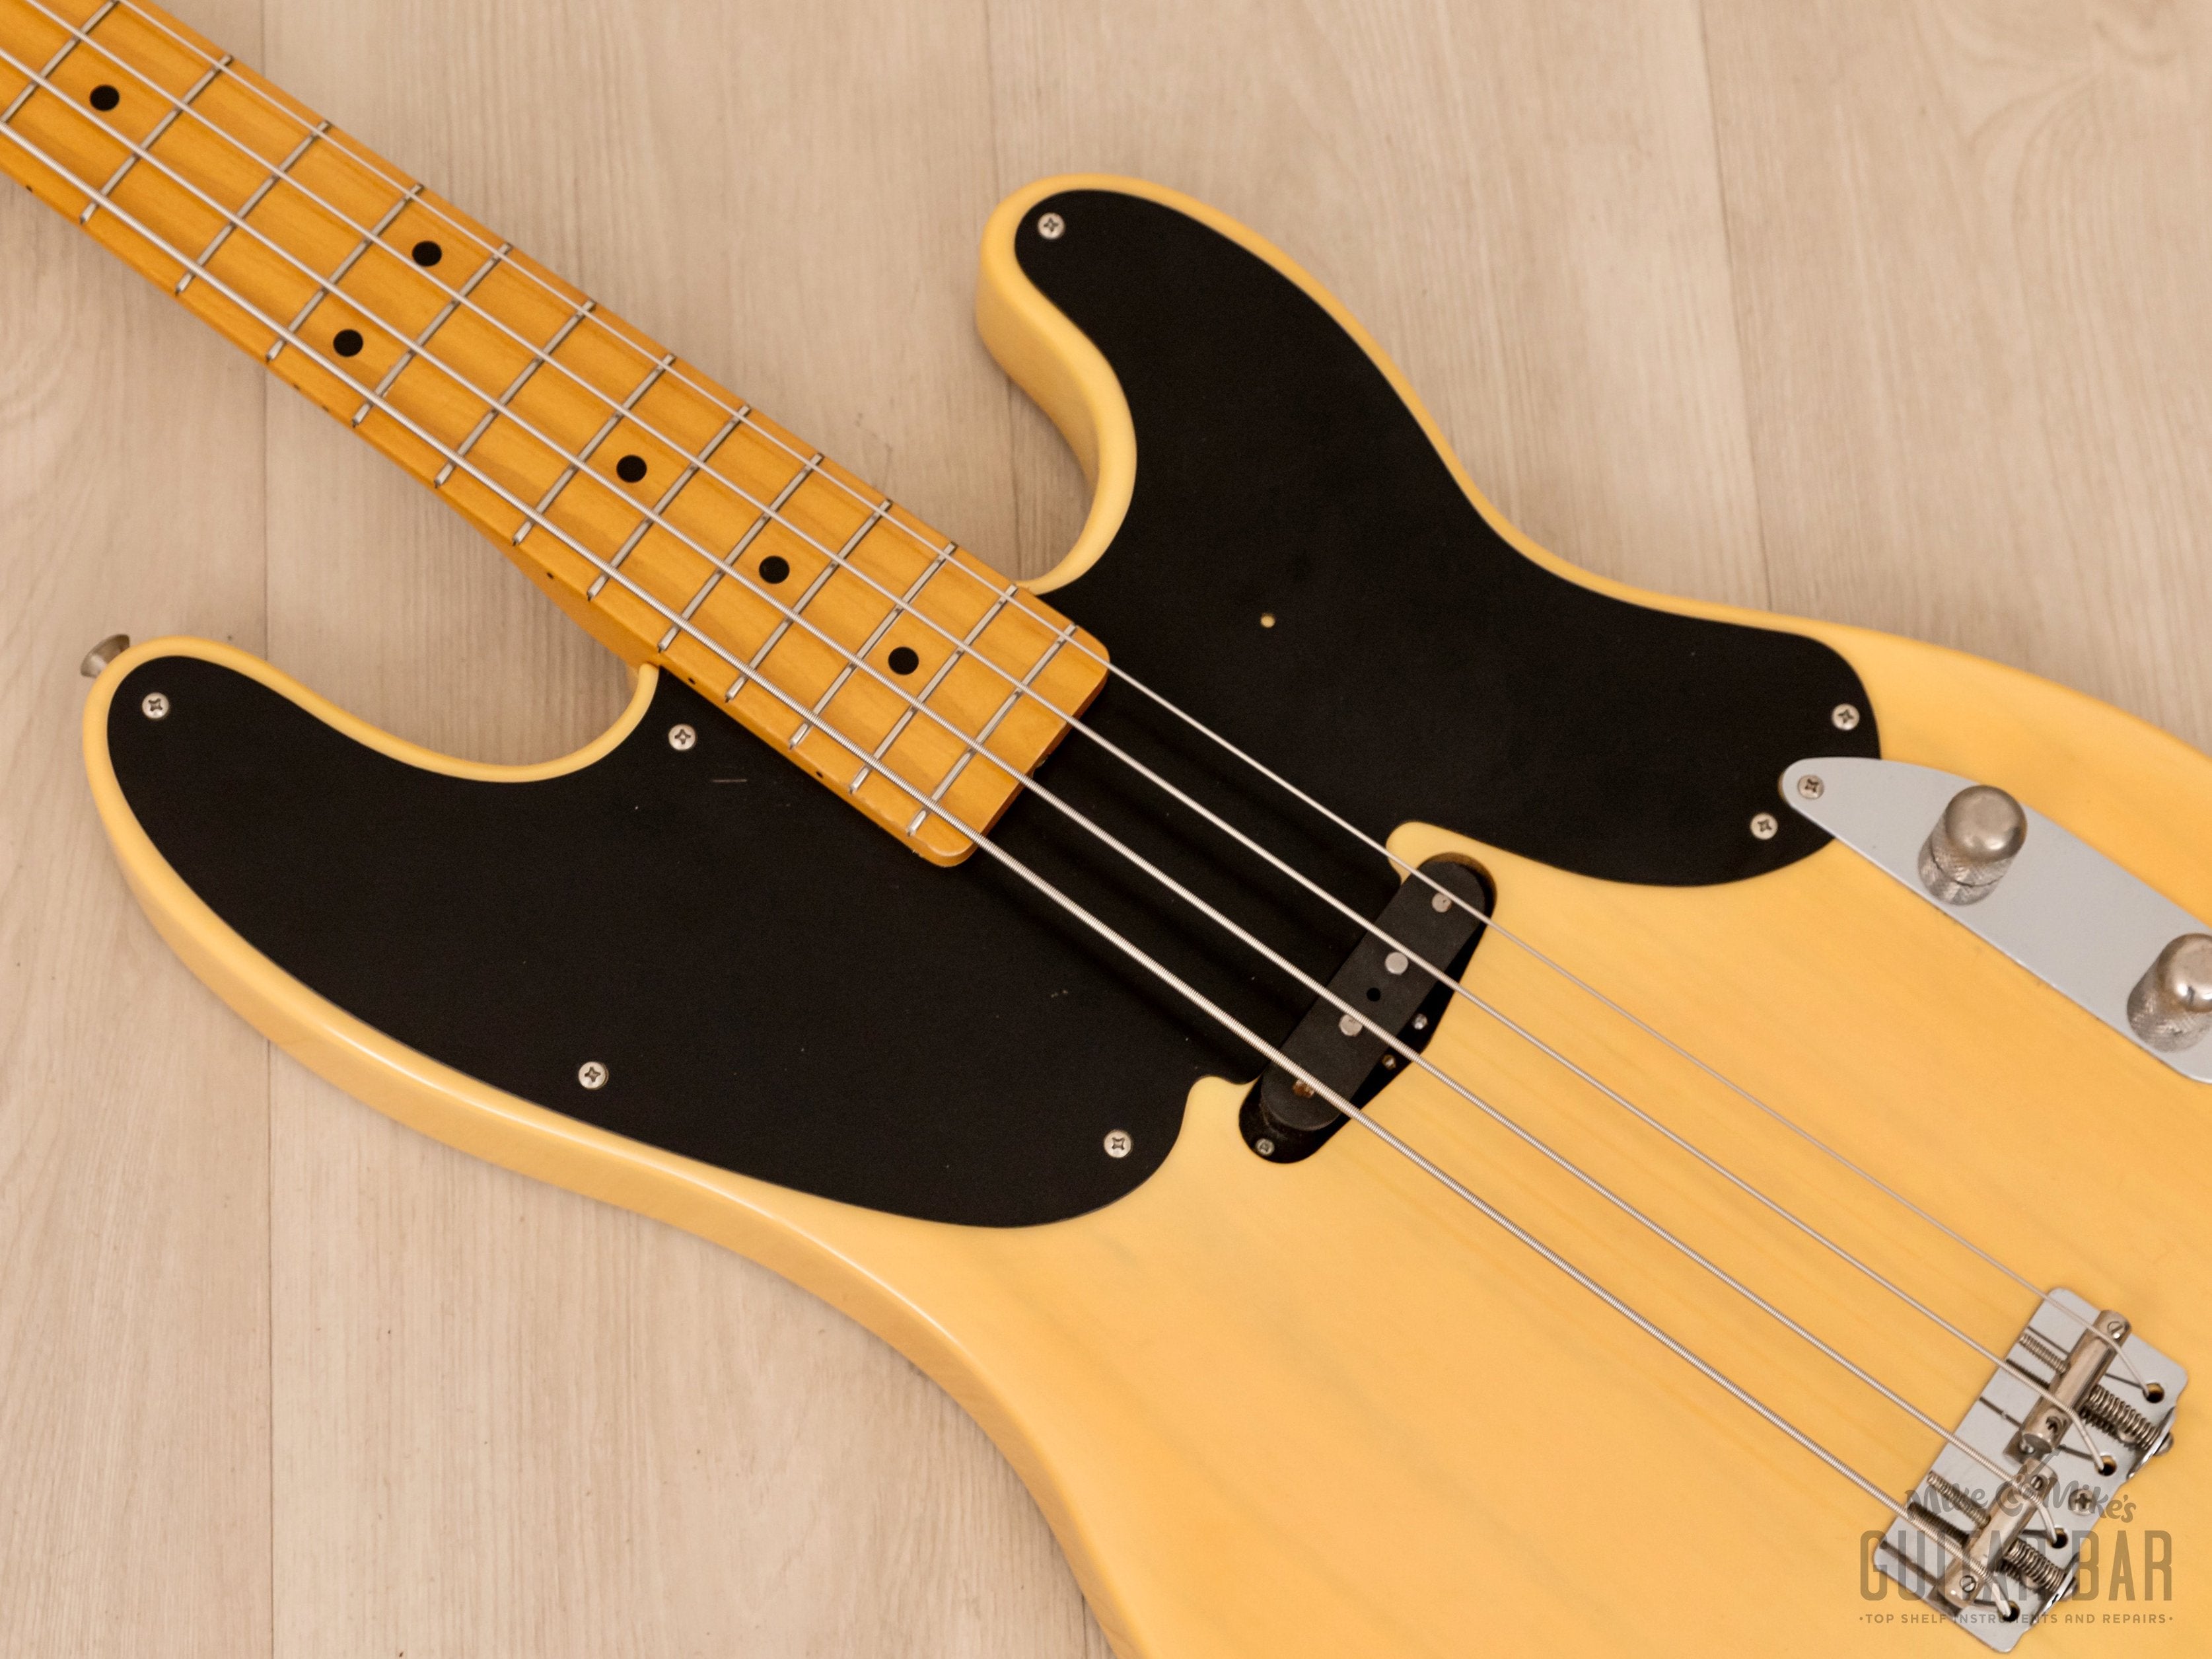 1991 Fender Precision Bass '51 Vintage Reissue Model OPB-51DM w/ USA Pickup, G&G Case, Japan MIJ Fujigen